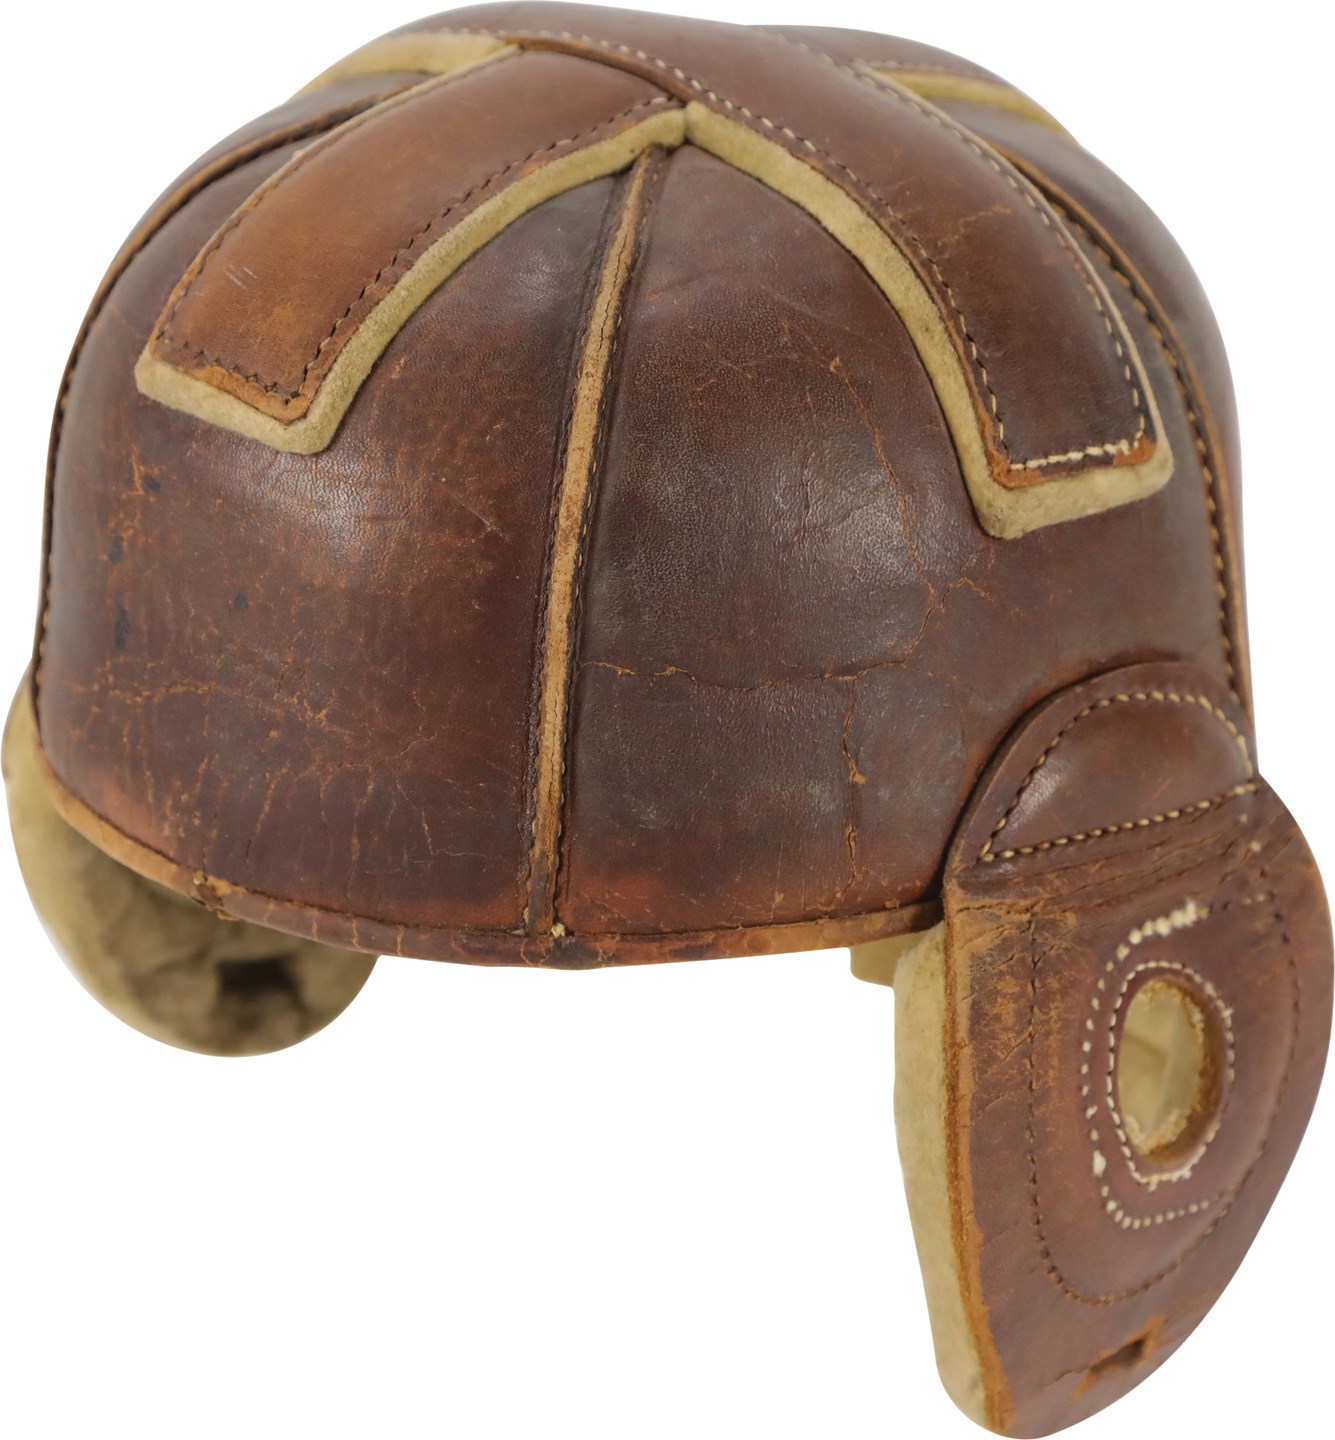 - 1920s Draper & Maynard Leather Helmet w/Crossed Strips on Top